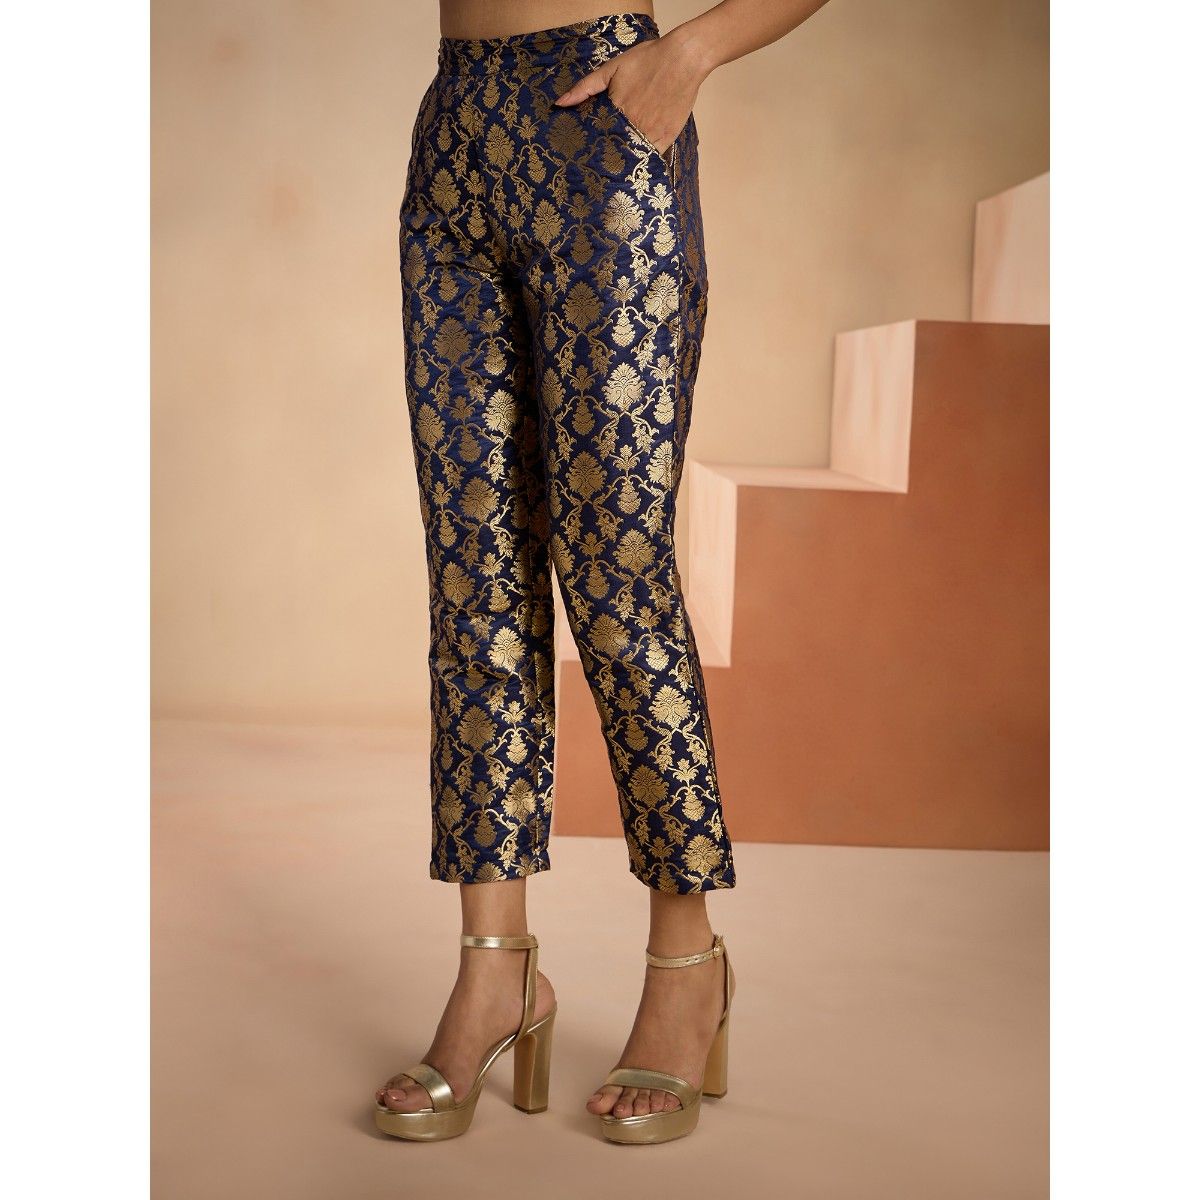 Buy RIVI Womens Regular Fit Brocade Blue Banarasi Trousers at Amazonin